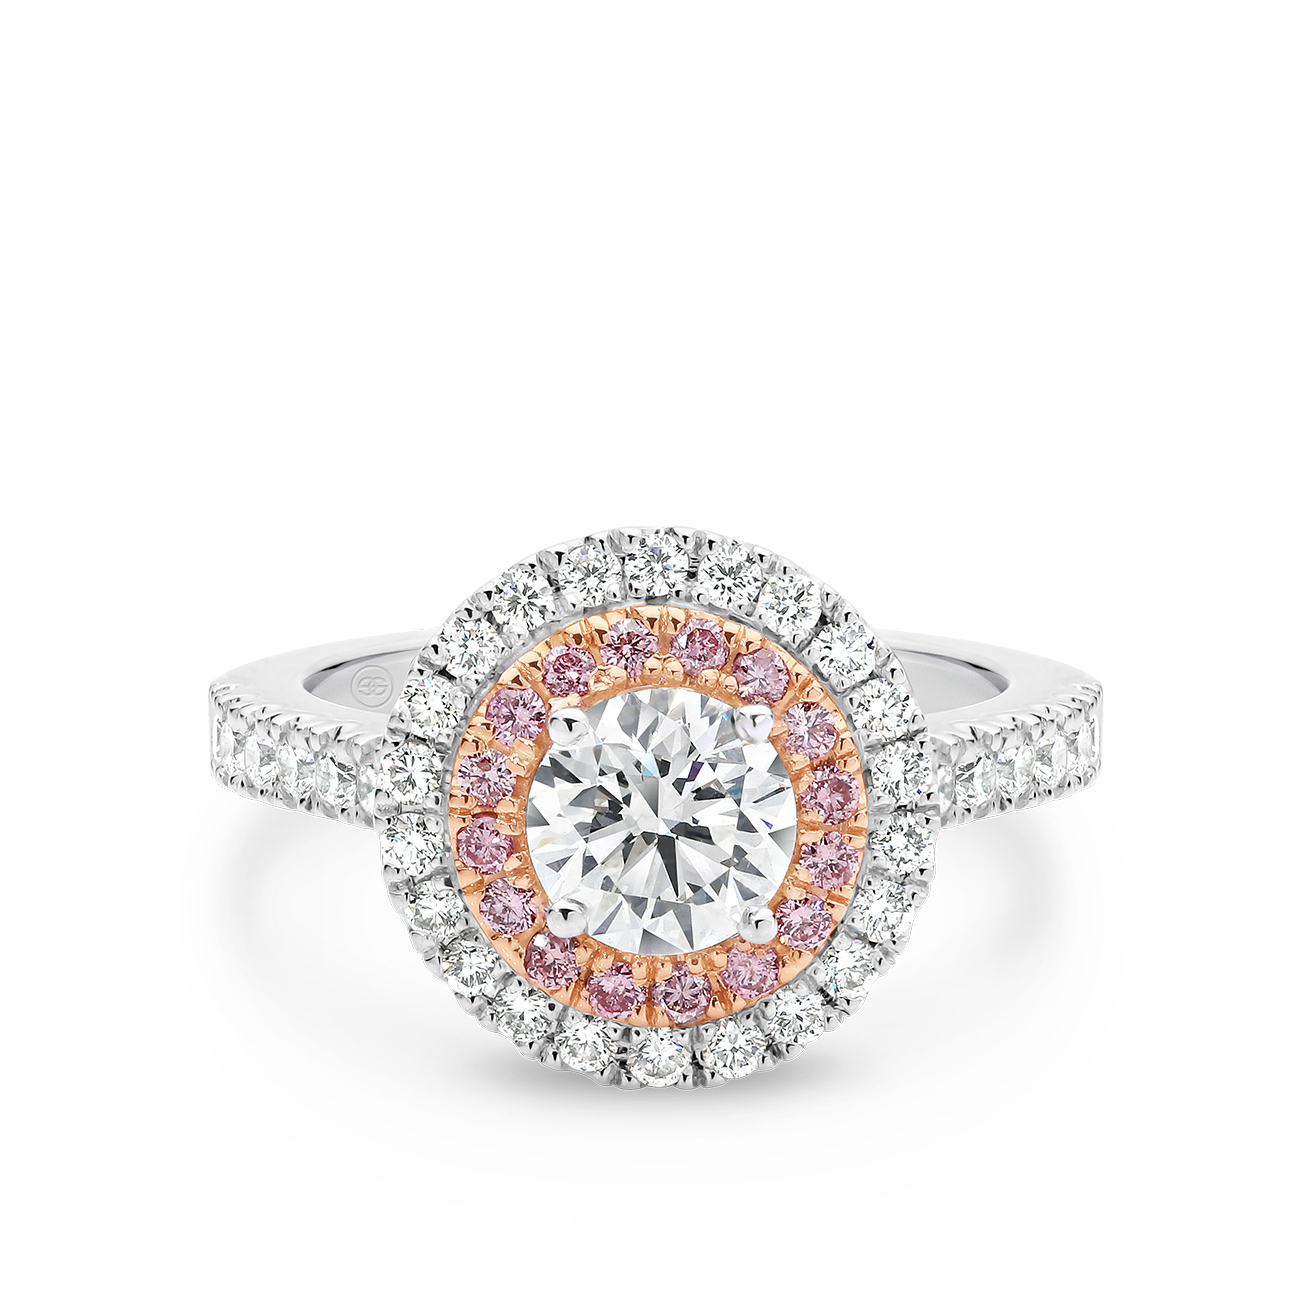 Round Brilliant White & Pink Double Halo Diamond Engagement Ring